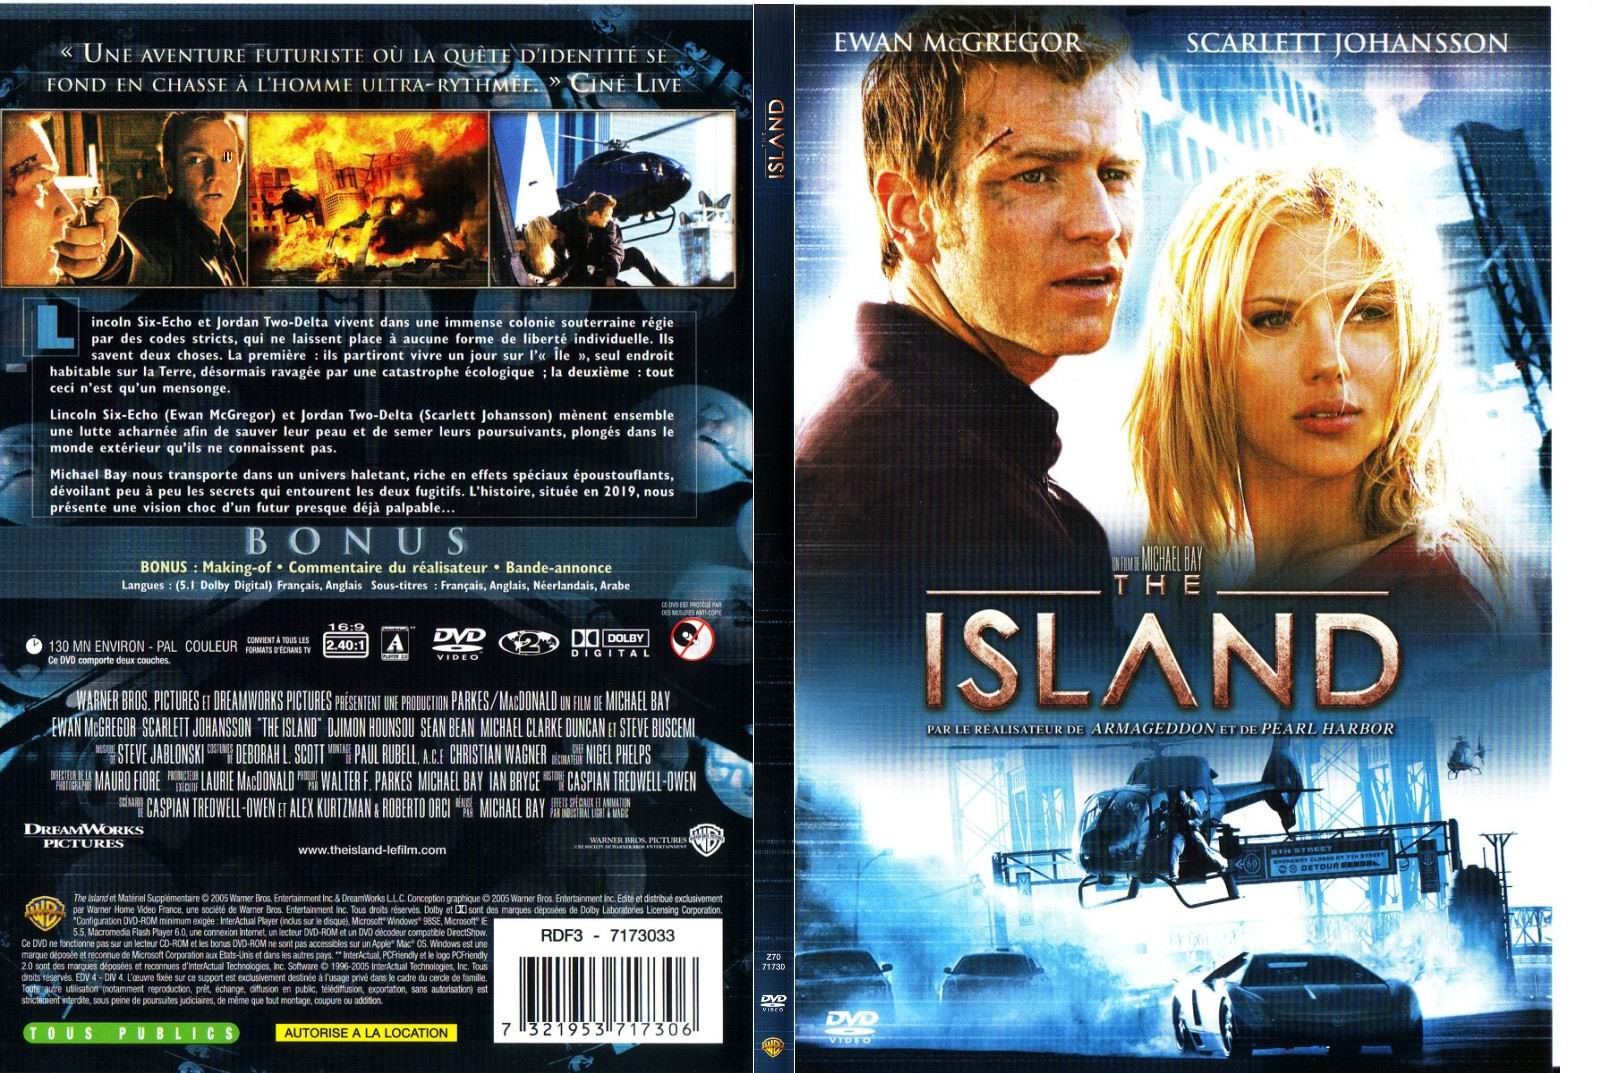 Jaquette DVD The island - SLIM